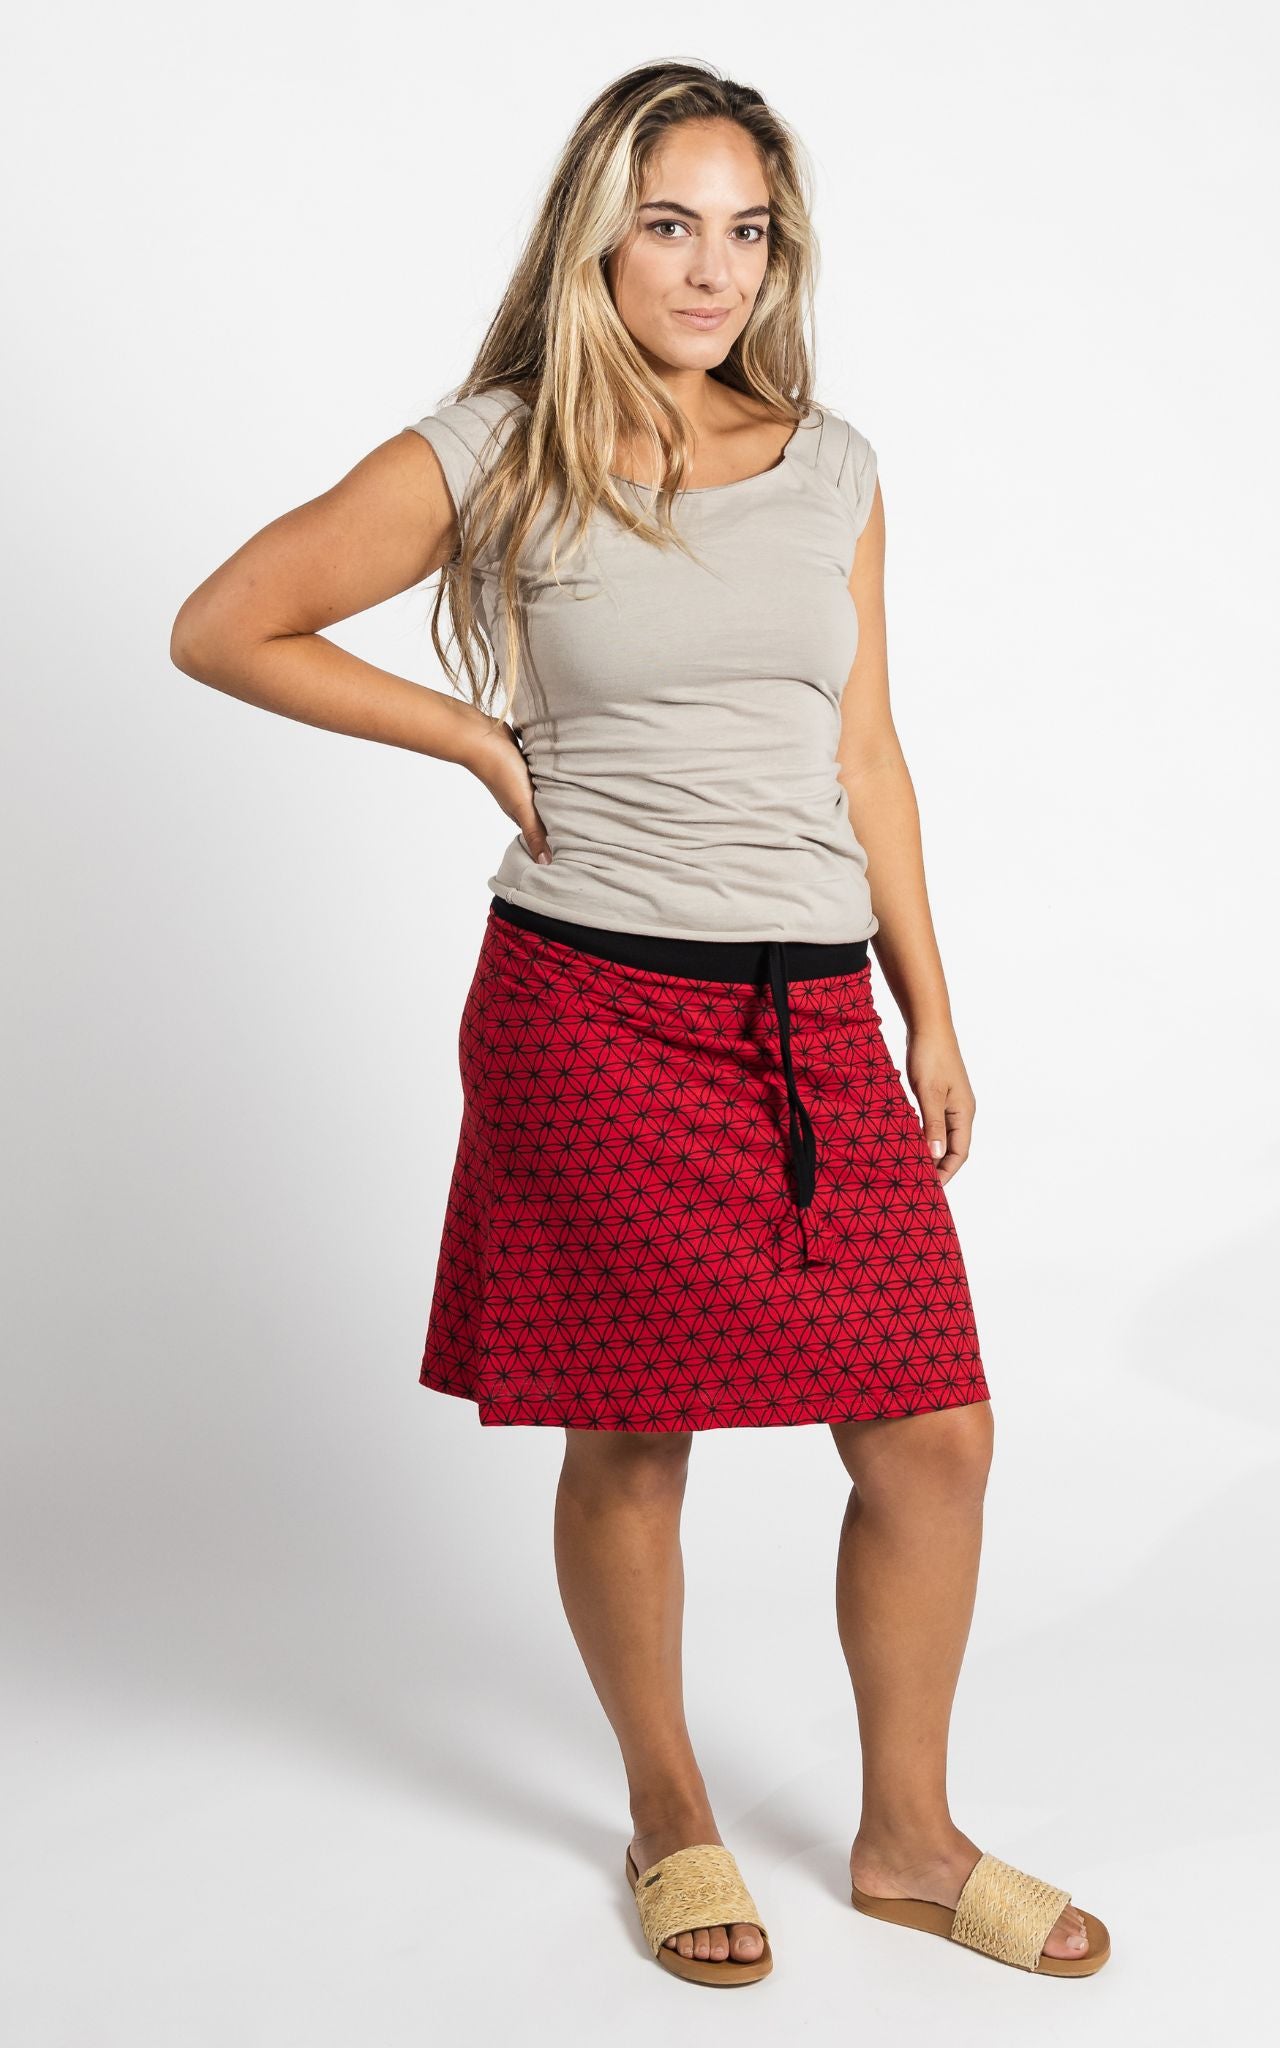 Surya Australia Ethical Cotton 'Anita' Skirt made in Nepal - Red